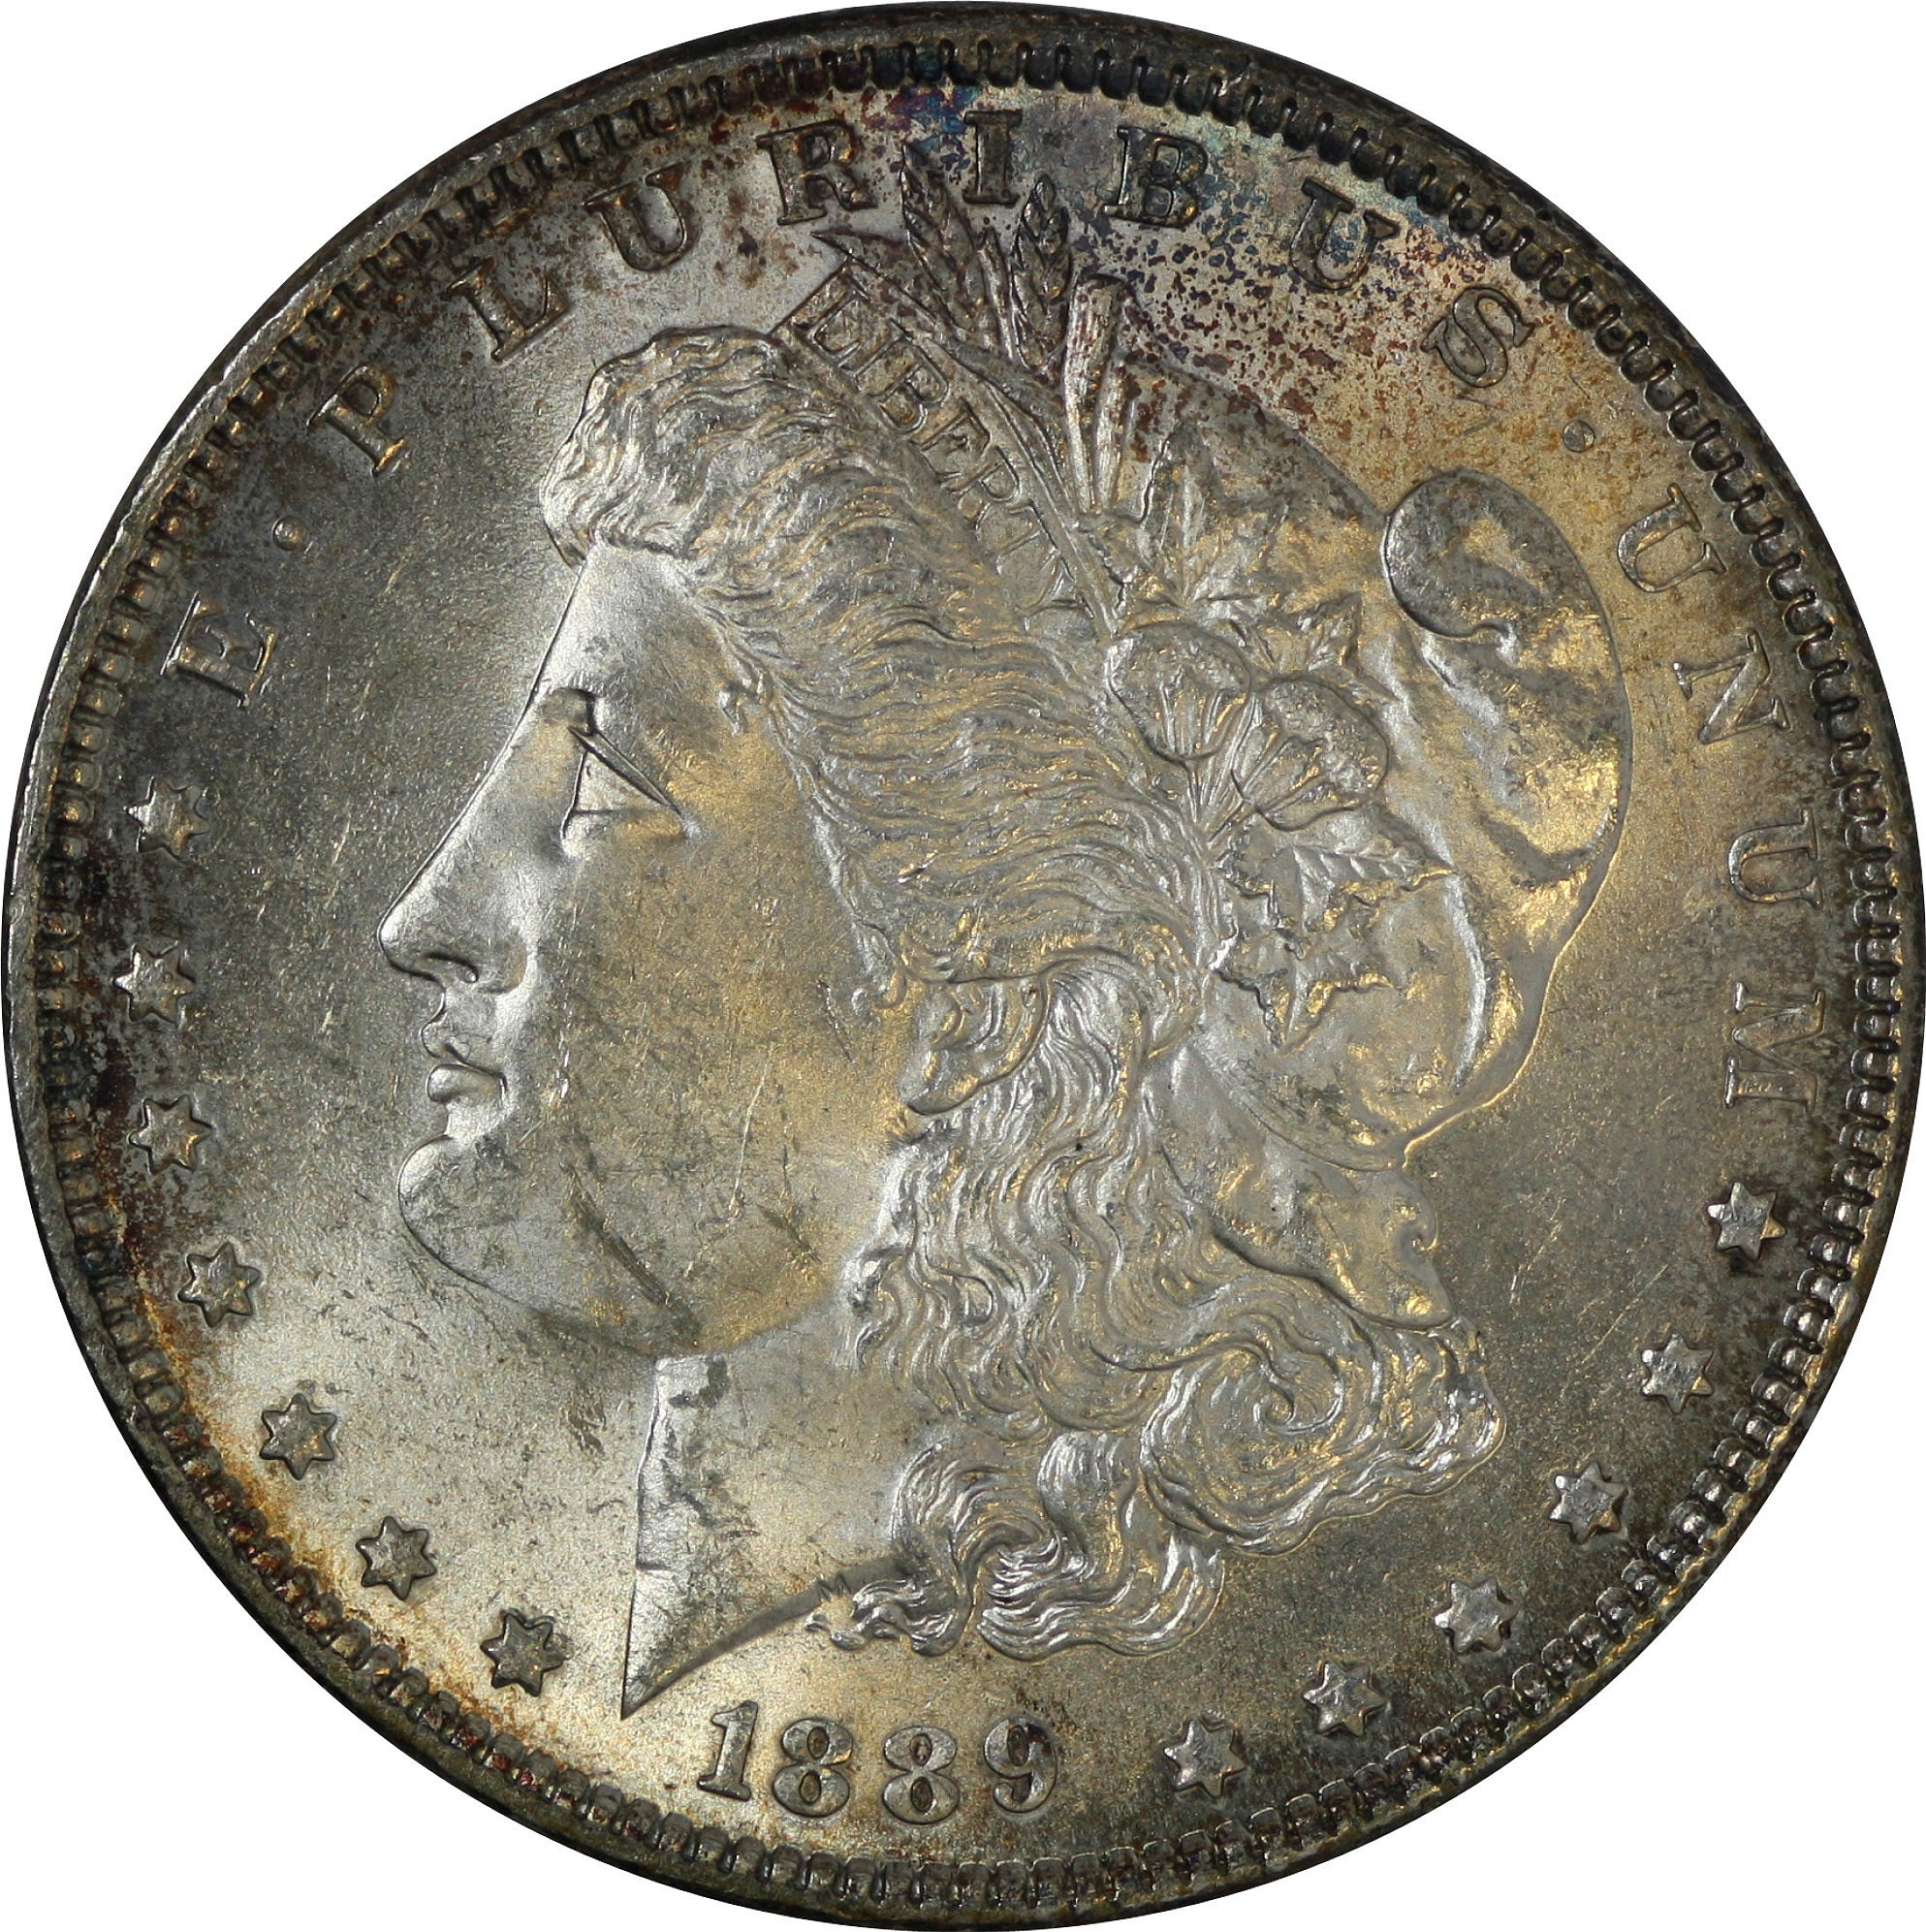 Morgan dollar - Wikipedia